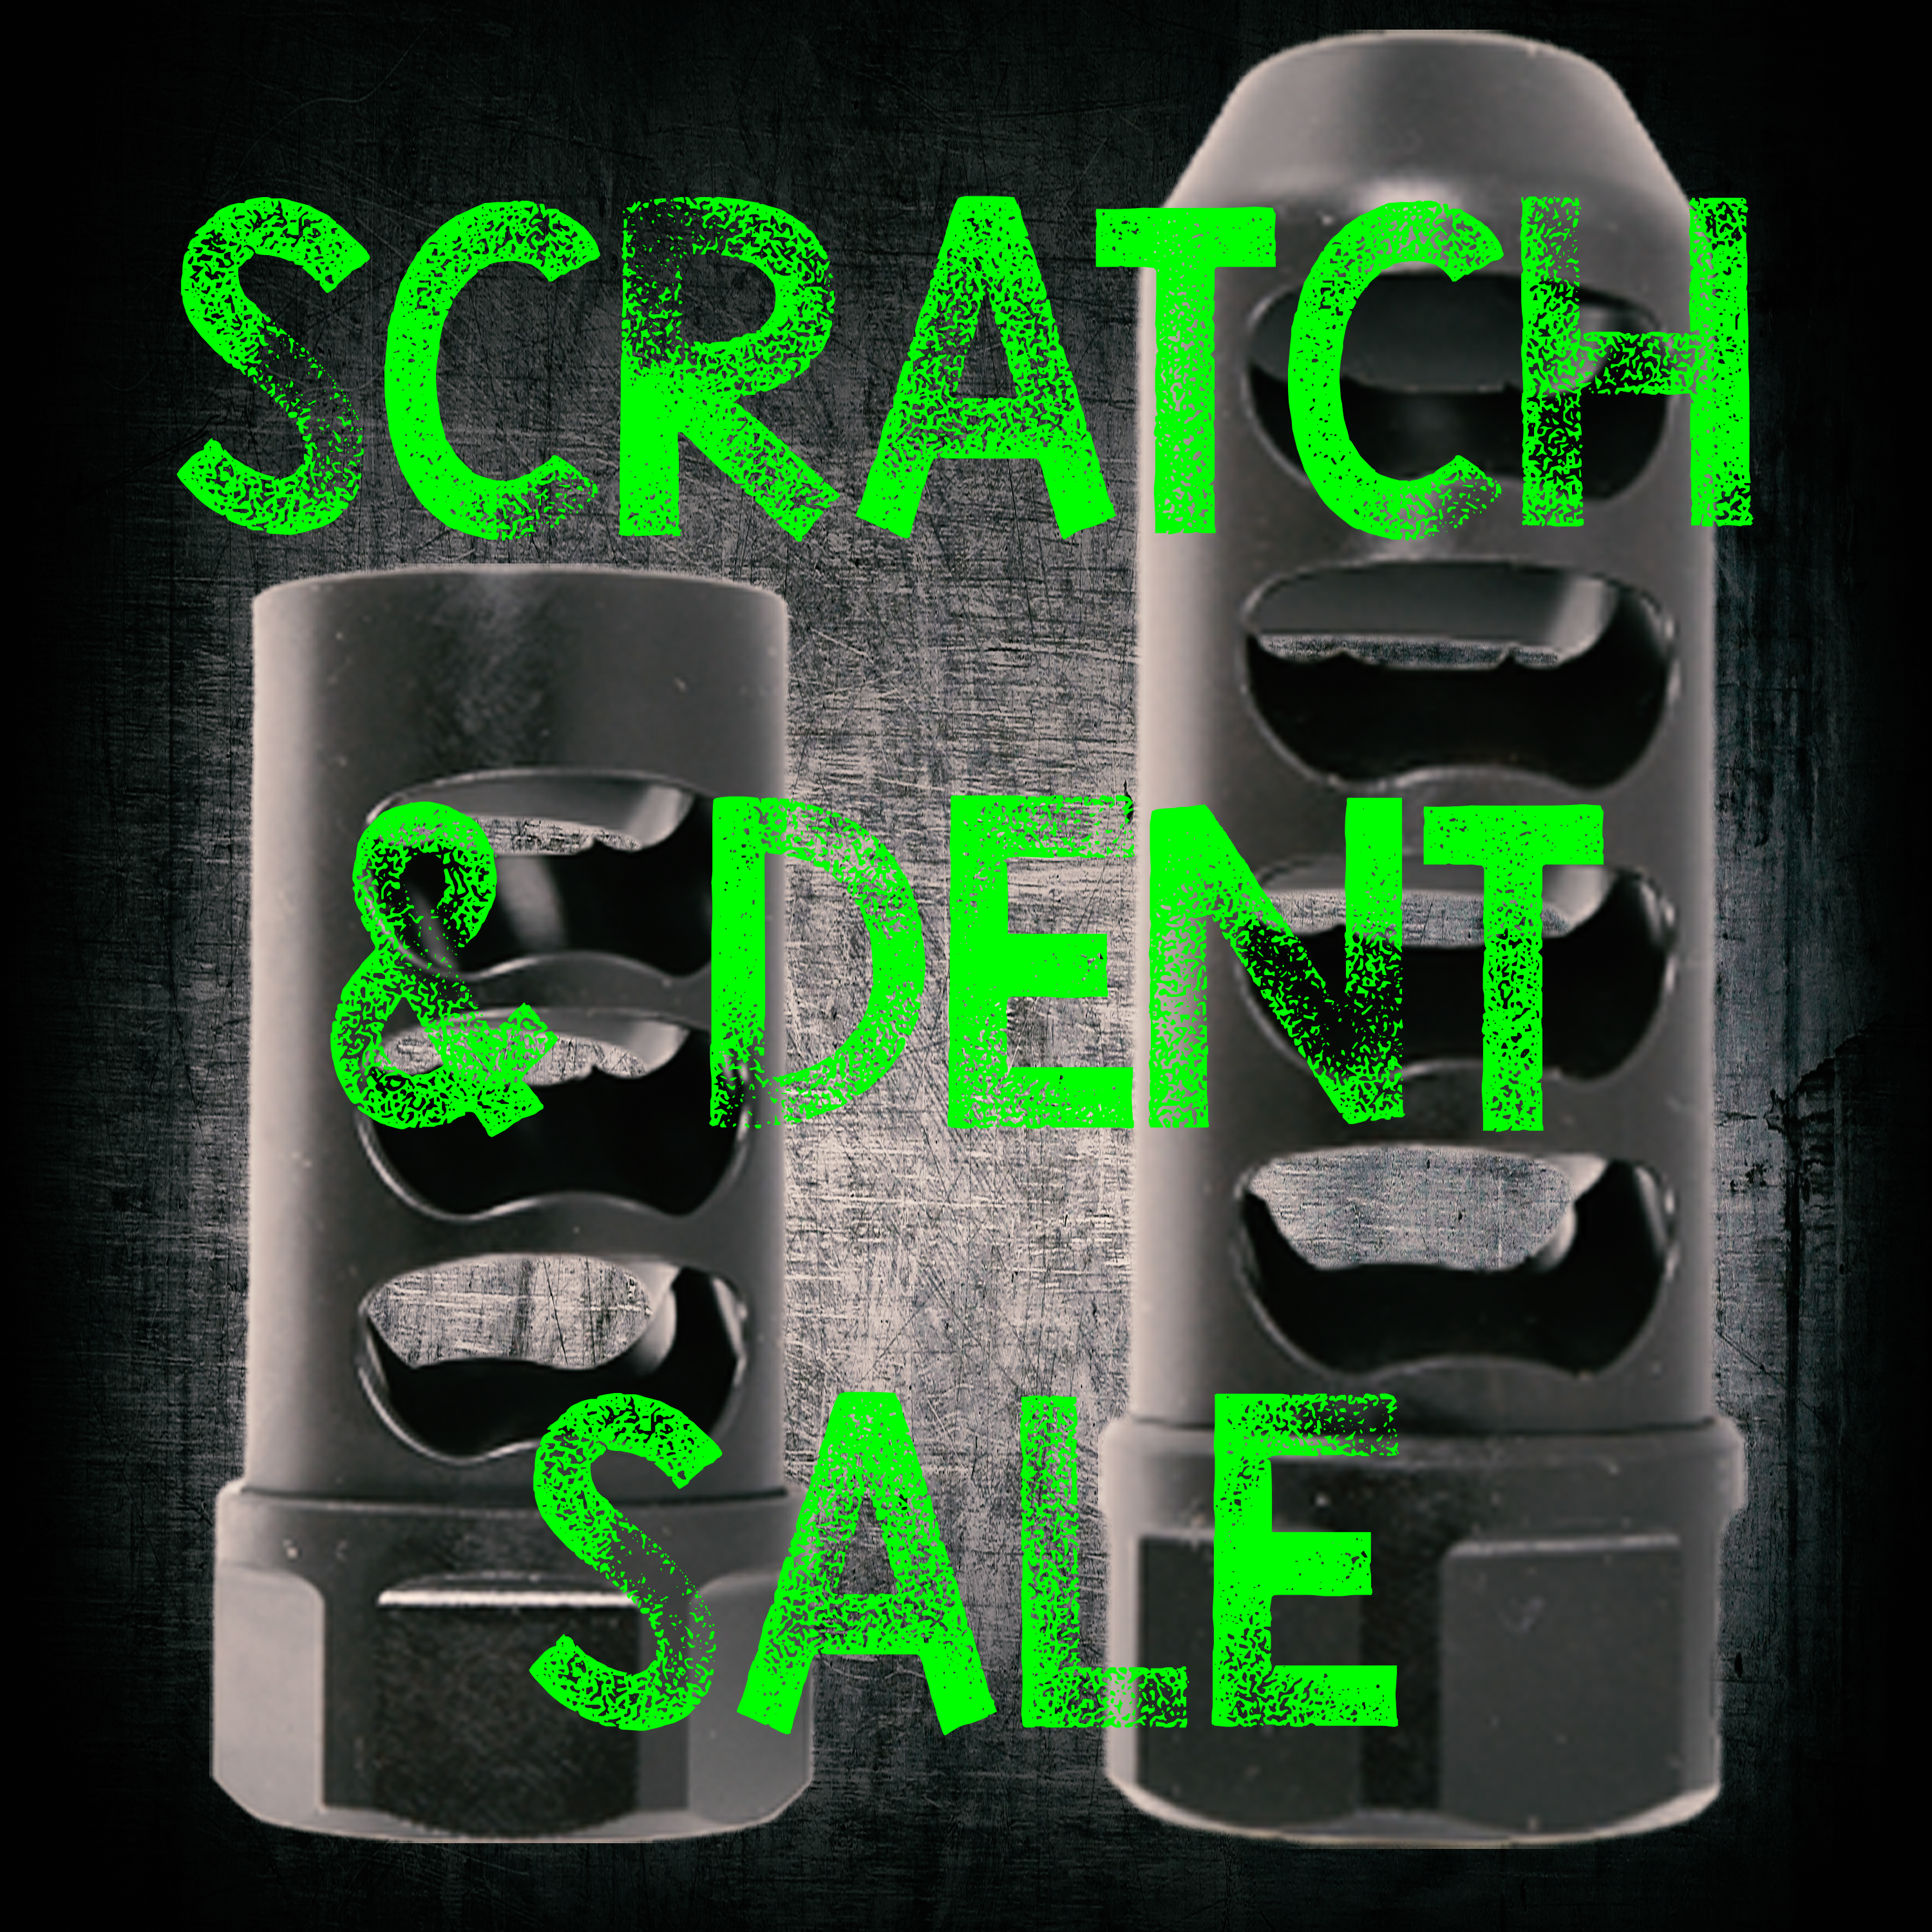 Scratch & Dent Sale